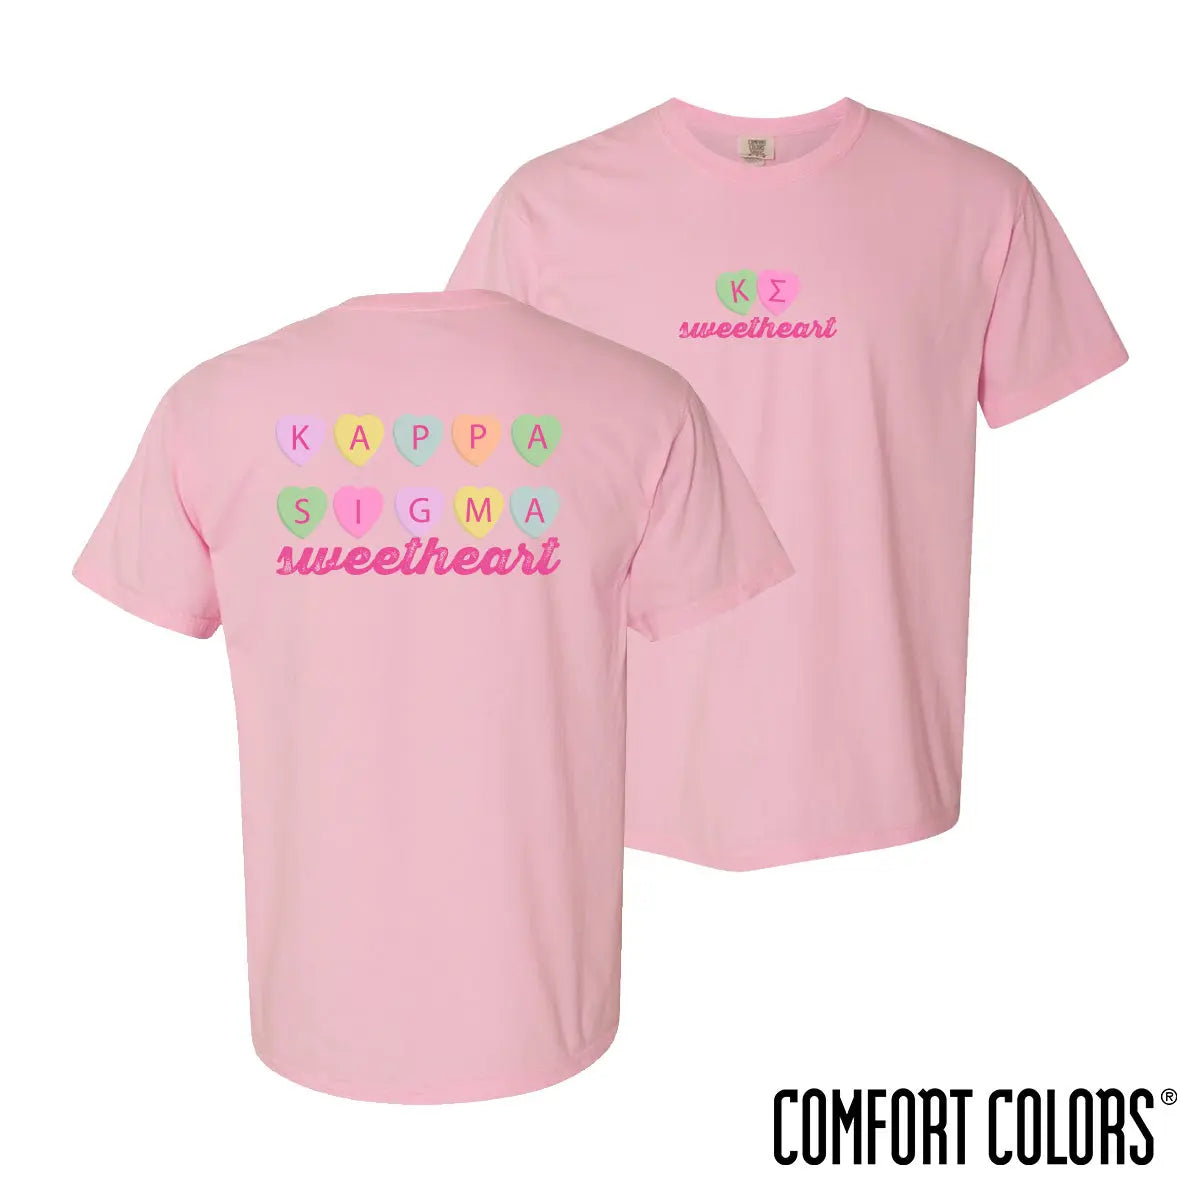 Kappa Sig Comfort Colors Candy Hearts Short Sleeve Tee - Kappa Sigma Official Store